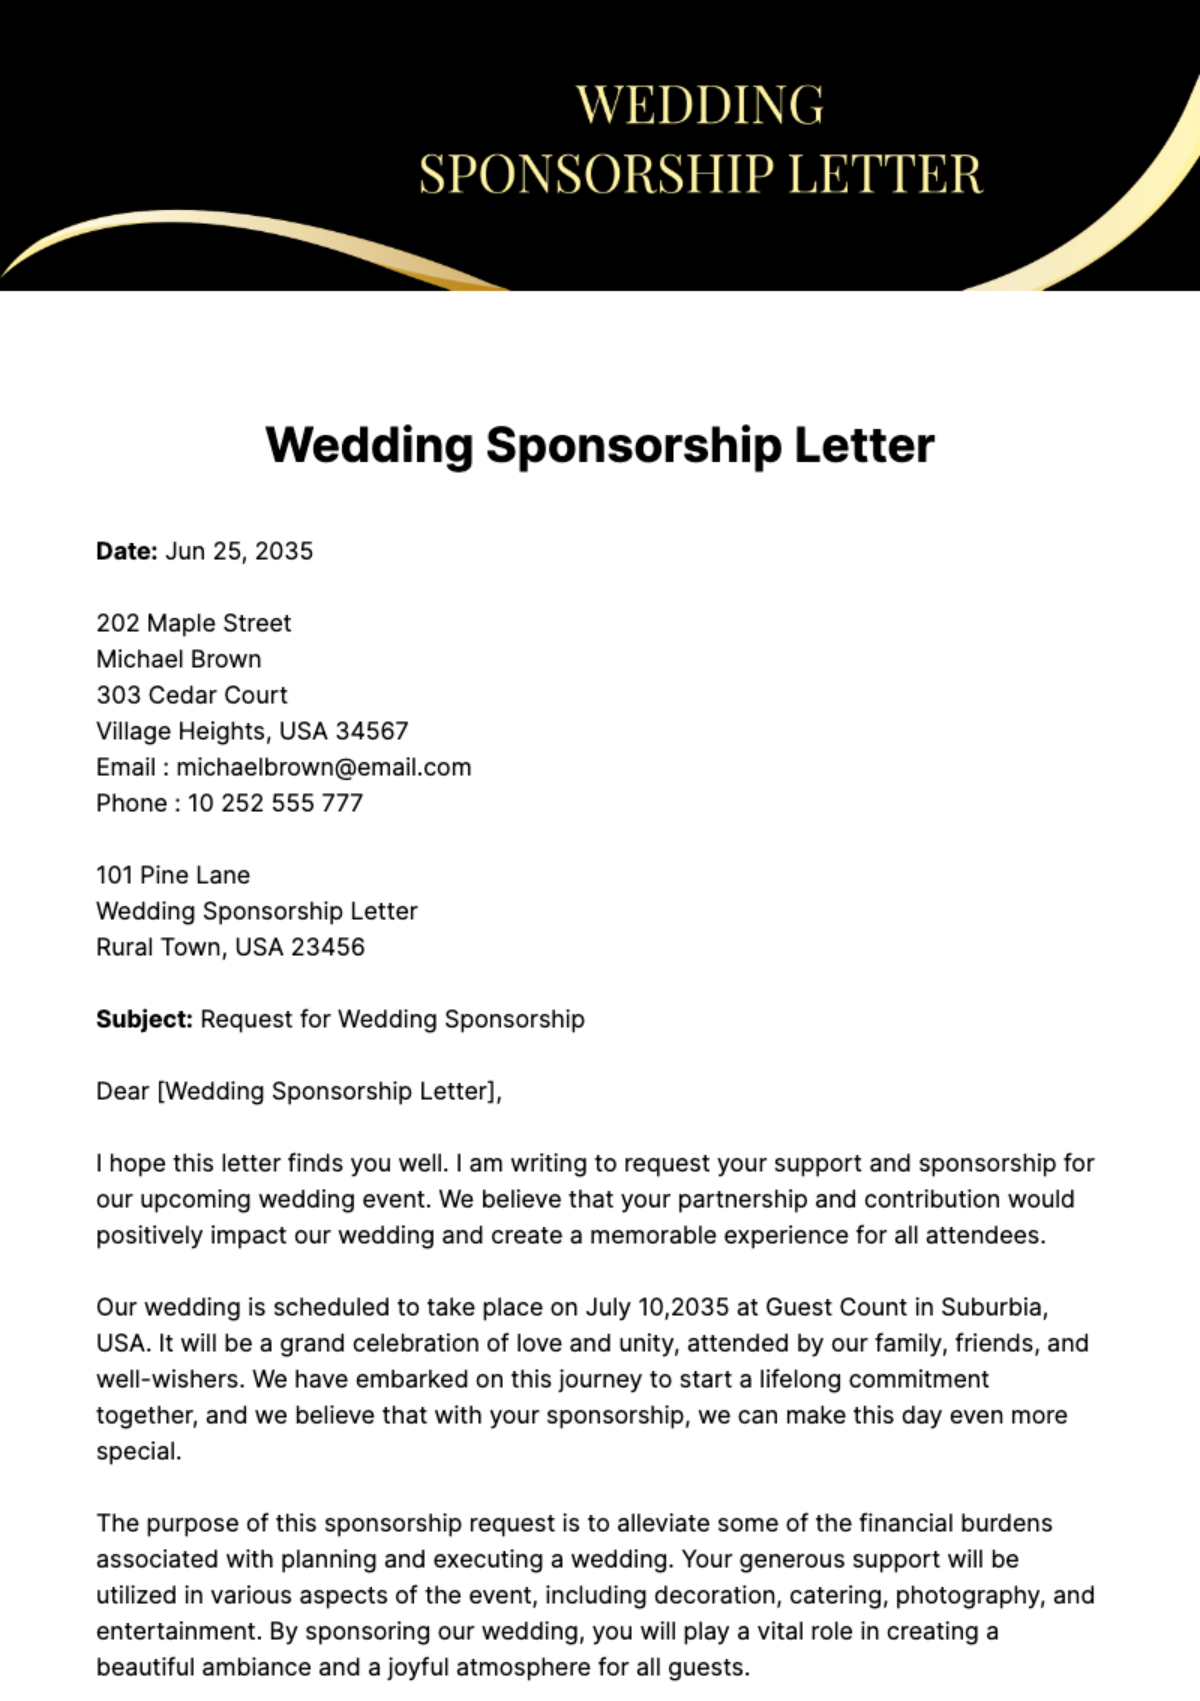 Free Wedding Sponsorship Letter Template